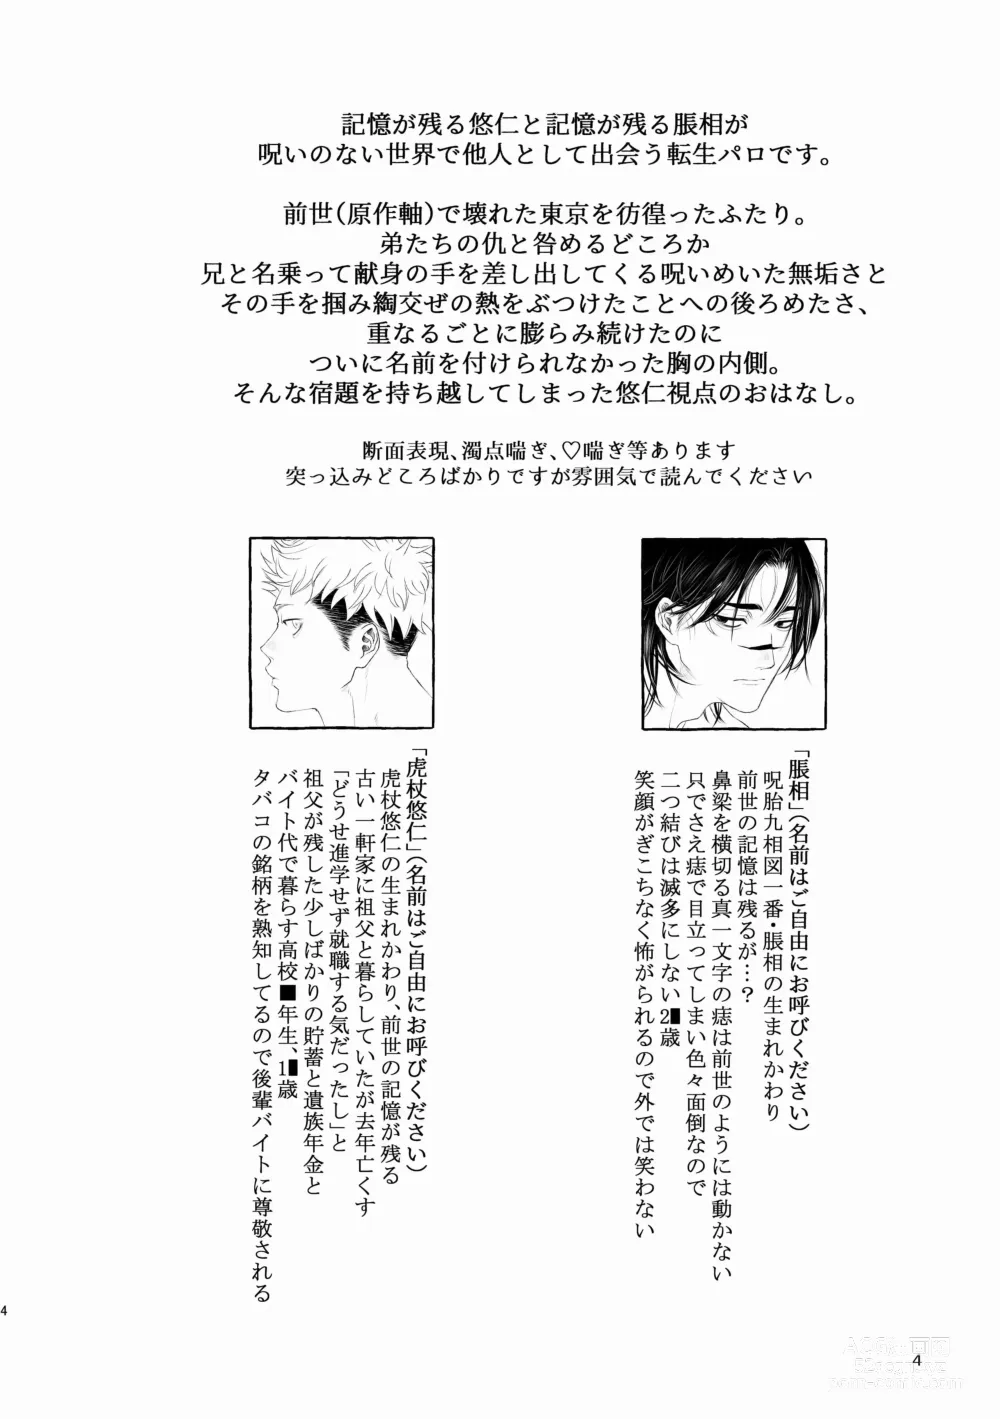 Page 4 of doujinshi Inryoku no Petrichor